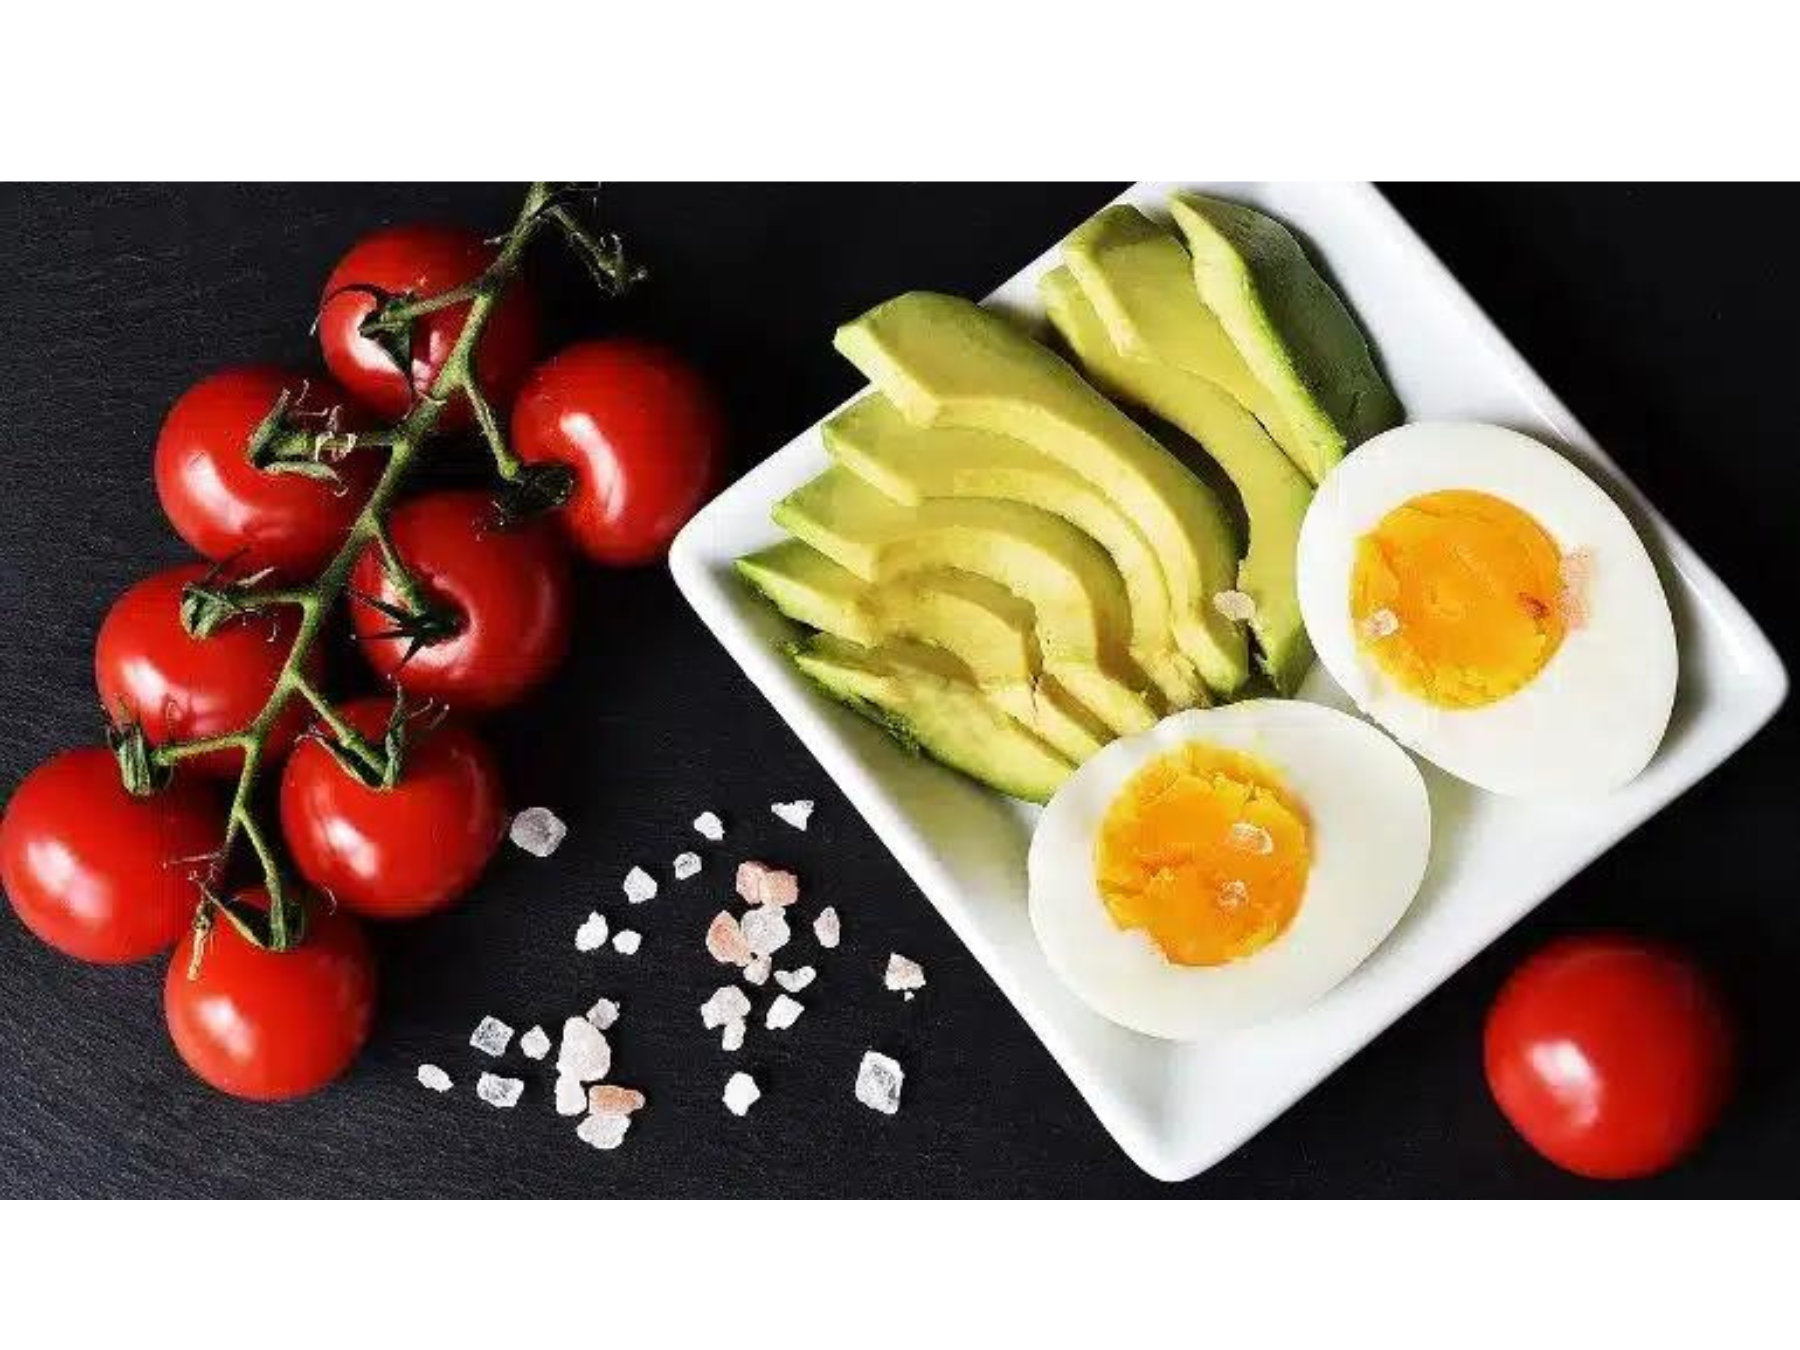 High Protein Diet Reduces Depression Symptoms